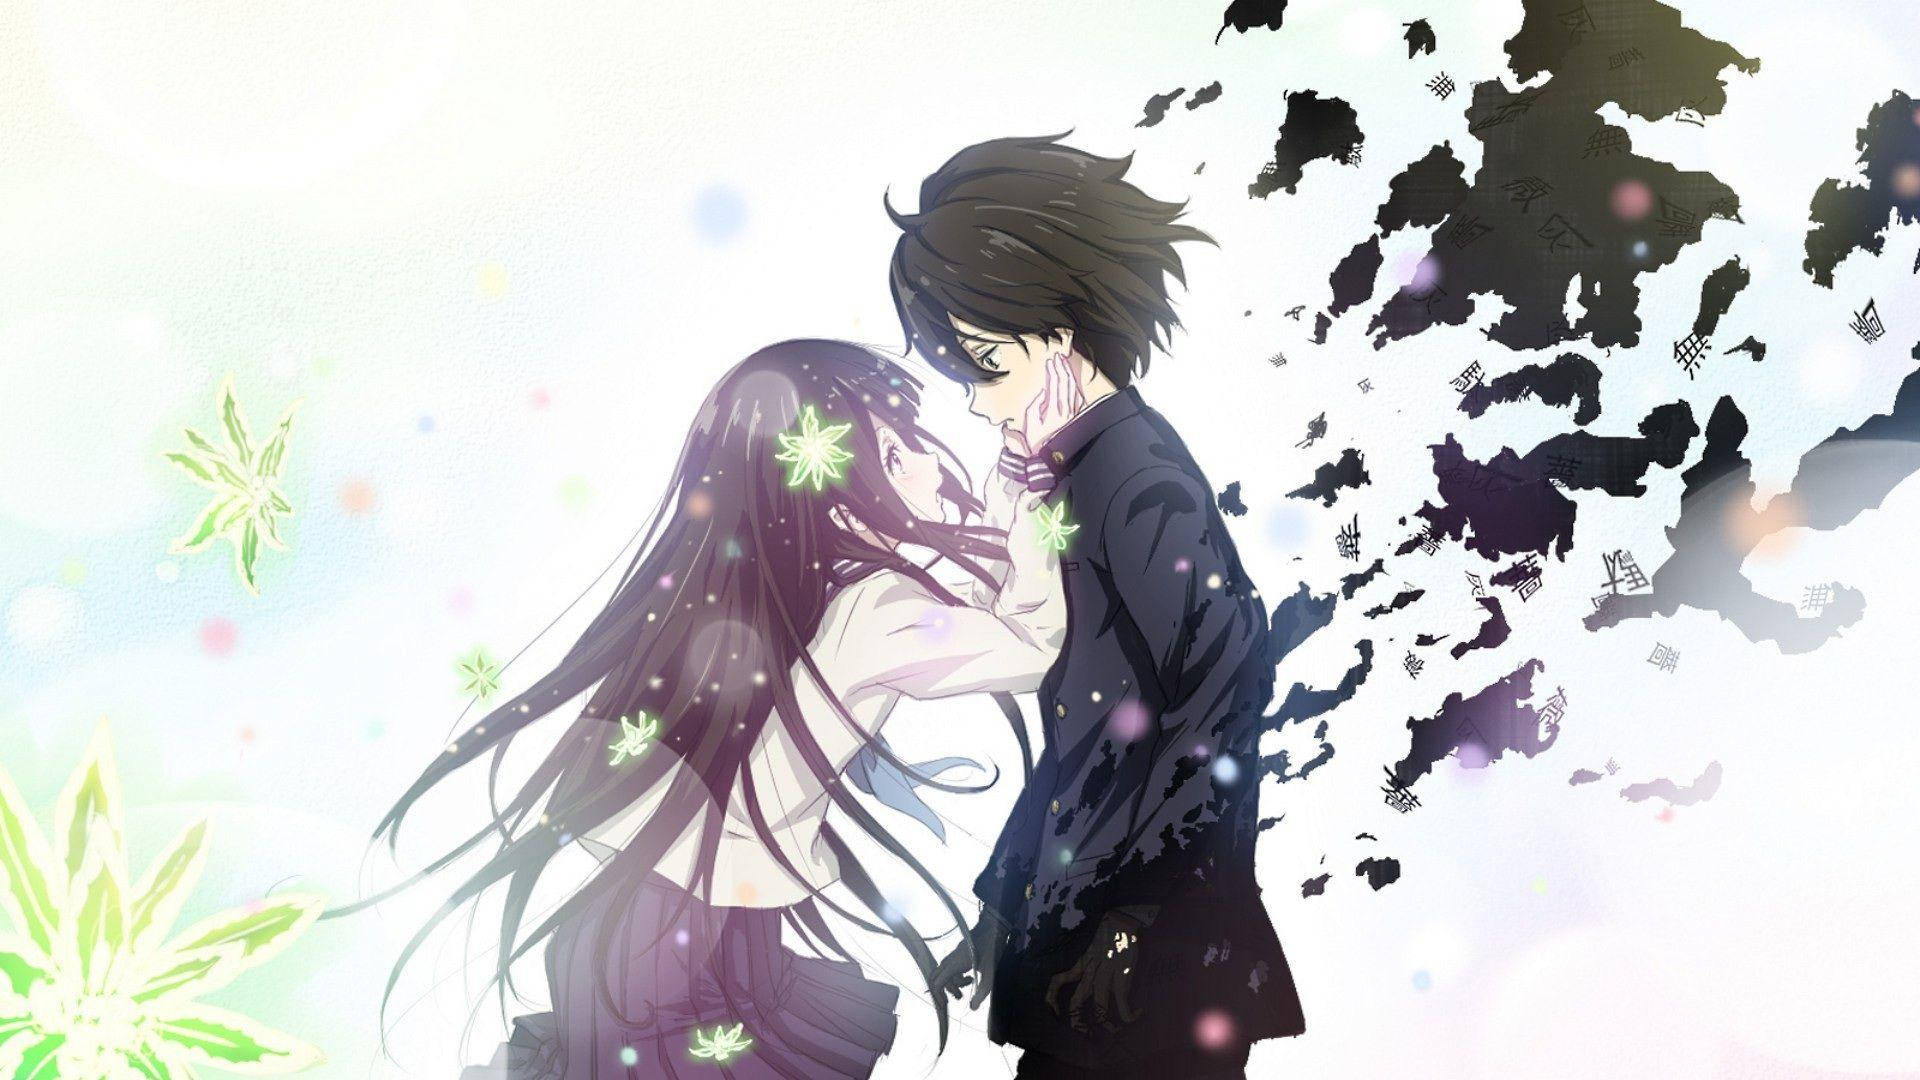 Free Romantic Anime Wallpaper Downloads, [100+] Romantic Anime Wallpapers  for FREE 